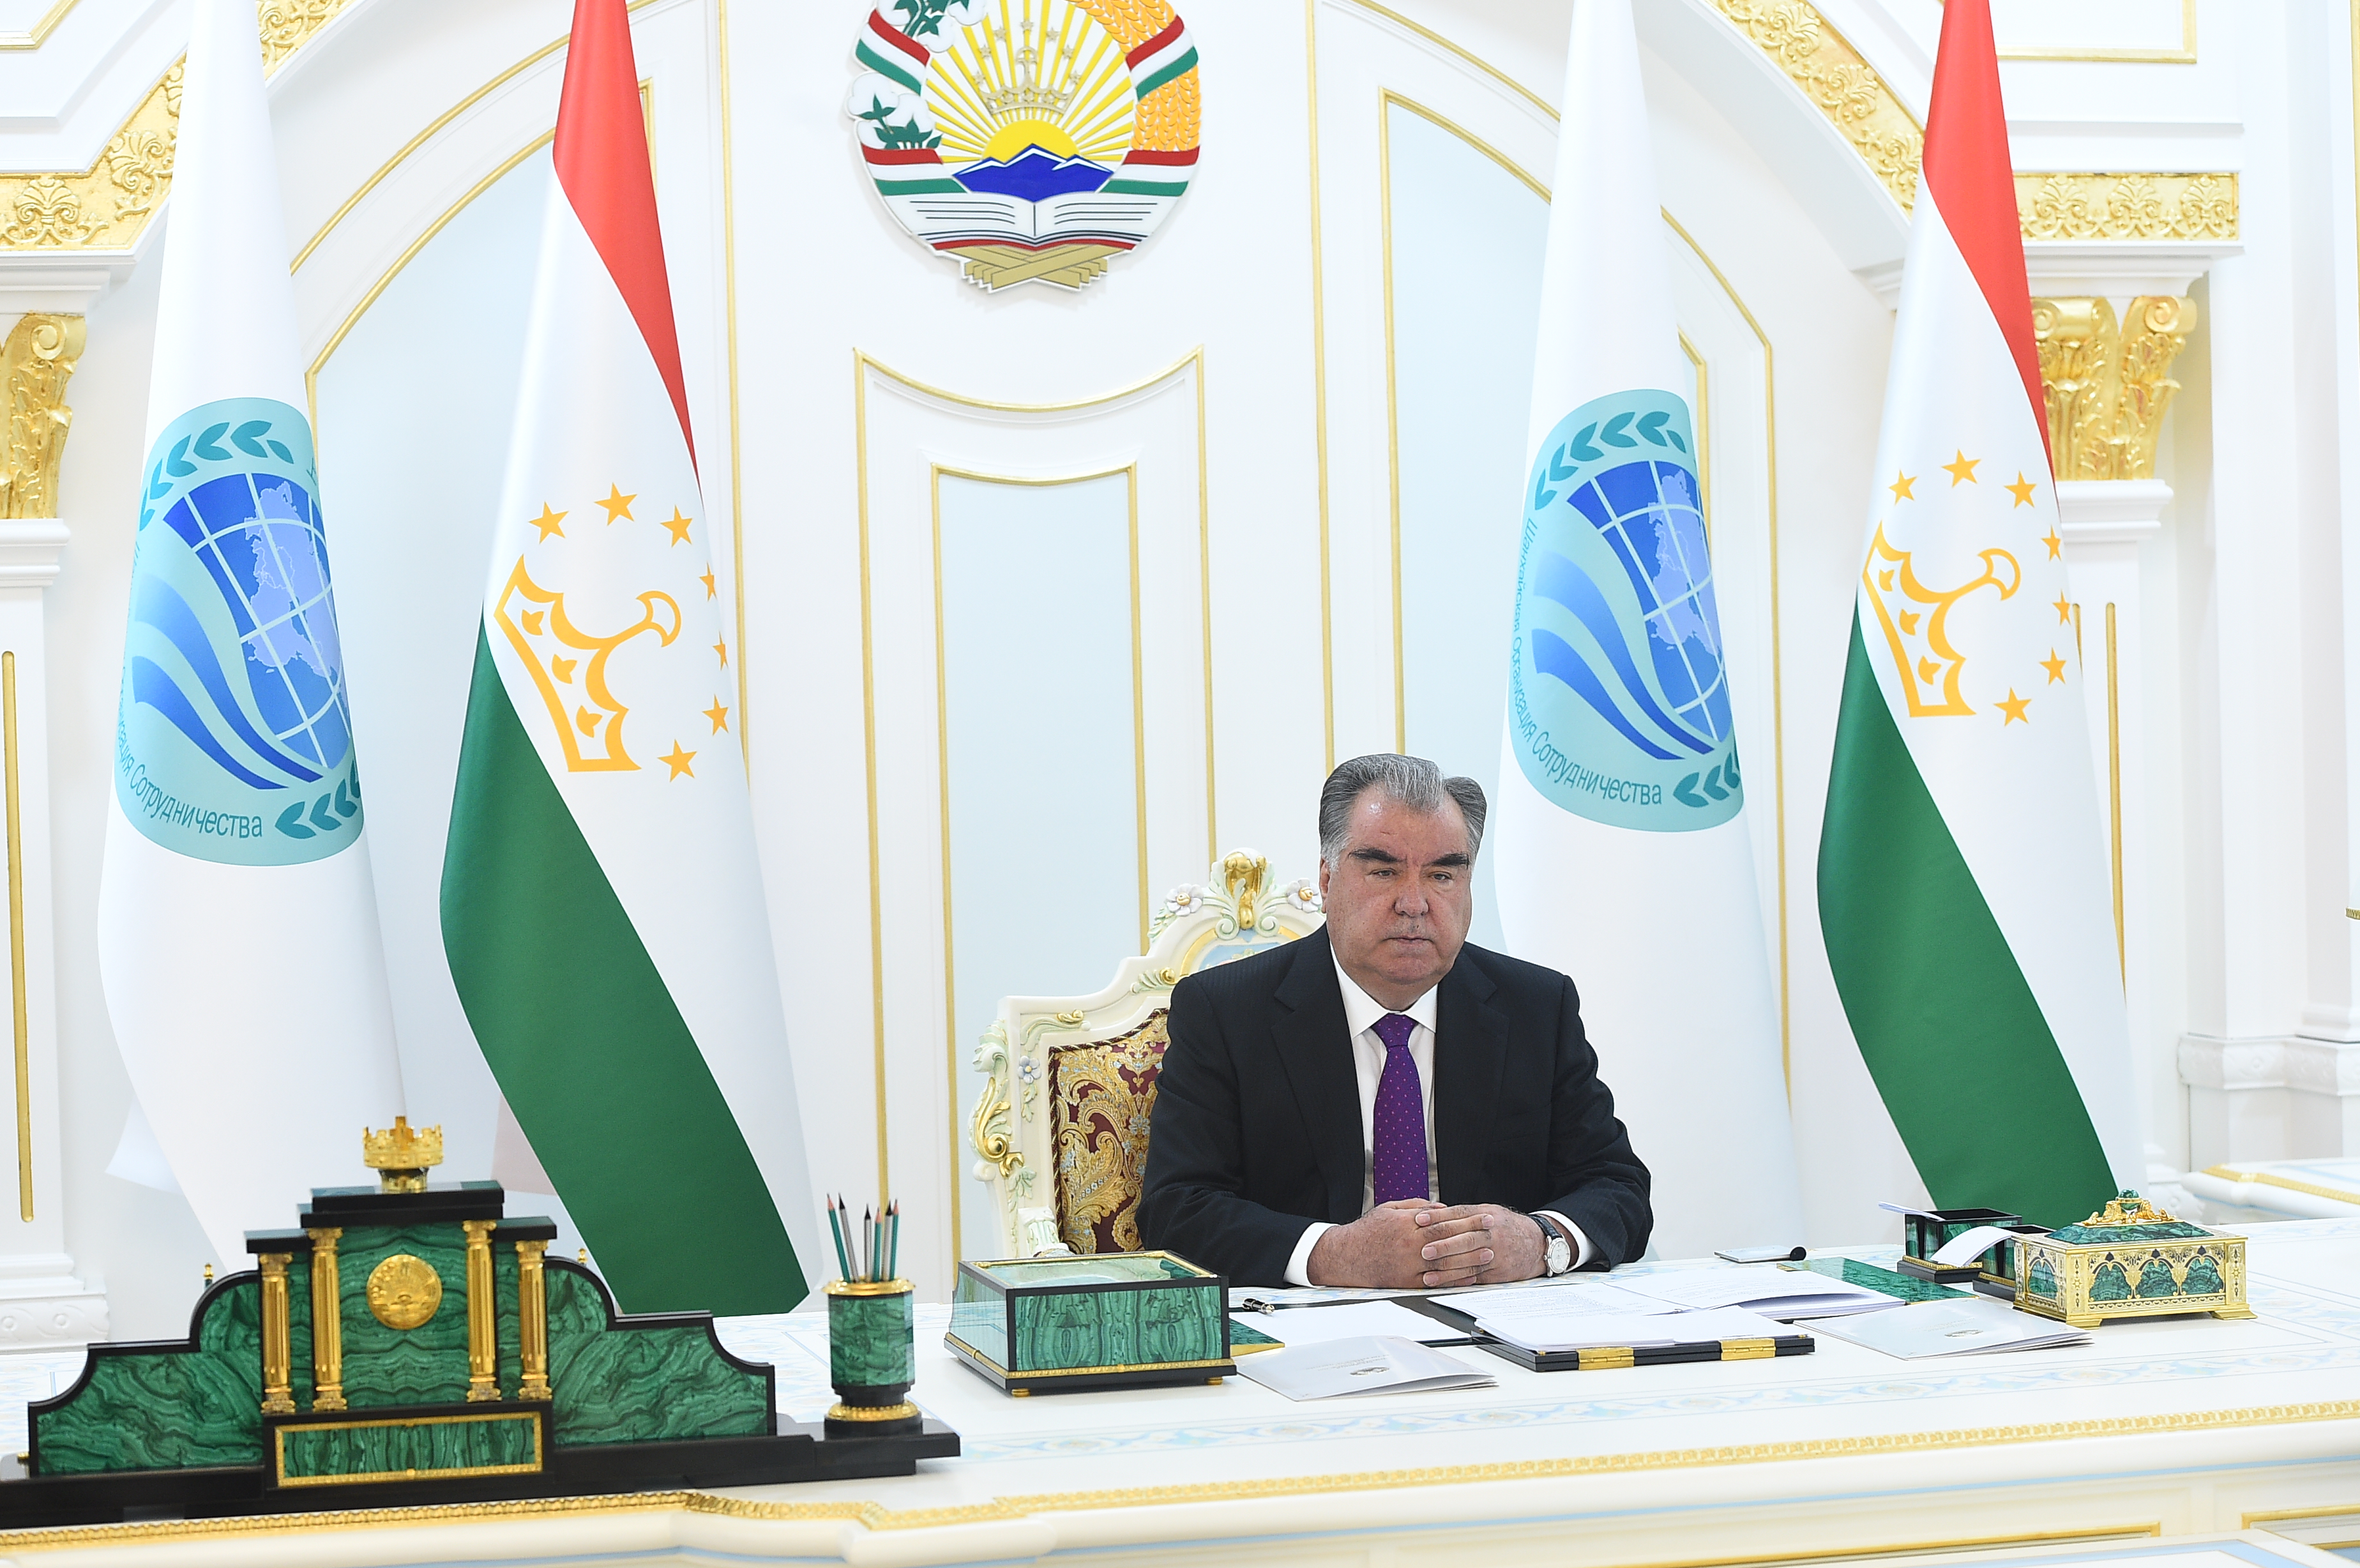 Заявление президента таджикистана. Эмомали Рахмон ШОС 2022. Лидер нации Эмомали Рахмон.